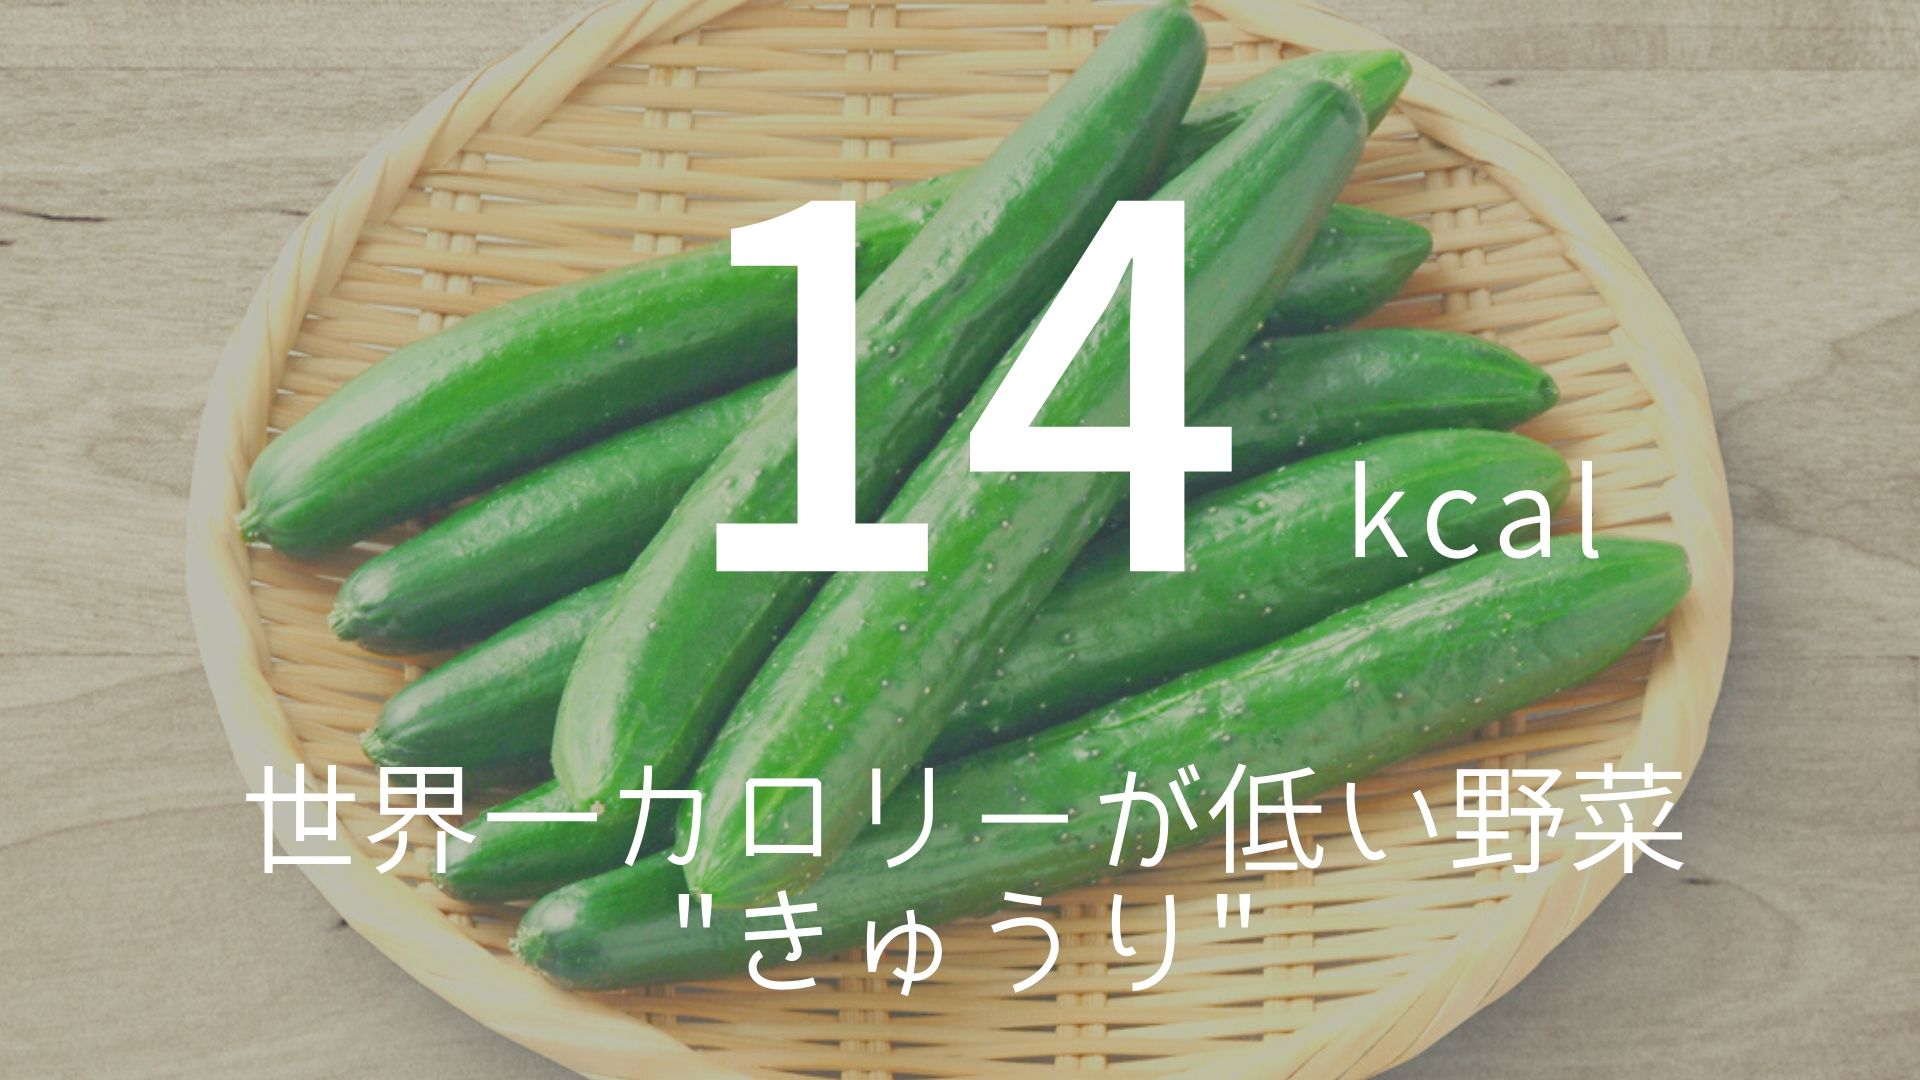 「14kcal」 >>> 世界一カロリーが低い野菜”きゅうり”